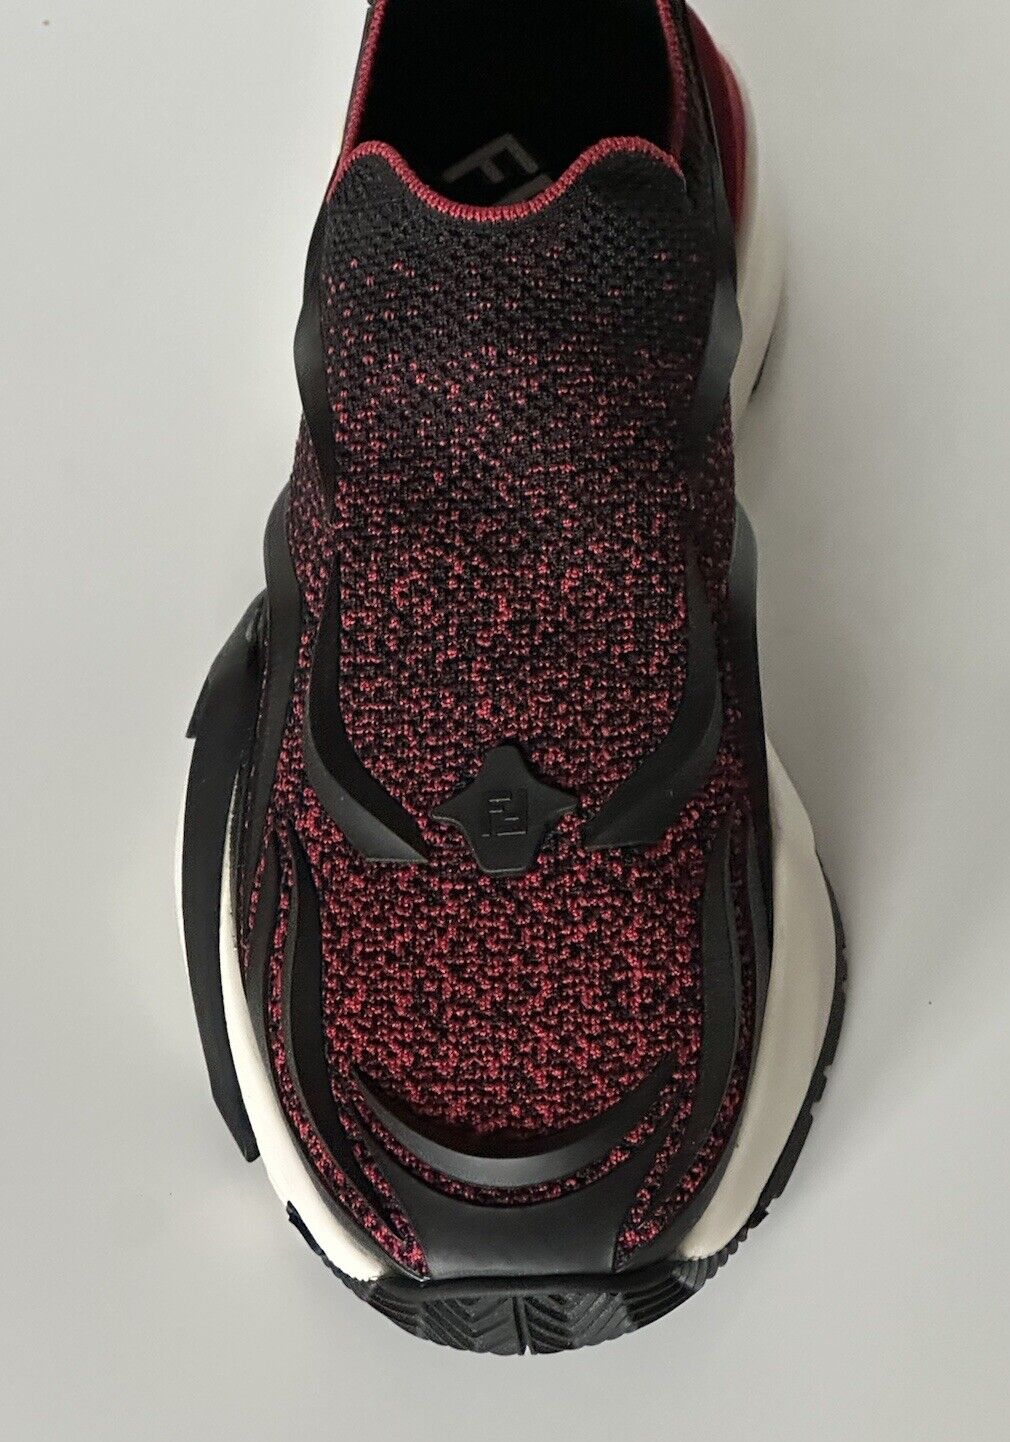 NIB $1050 Fendi Flow Men's Fabric Black/Red Sneakers 14 US (Fendi 13) 7E1504 IT